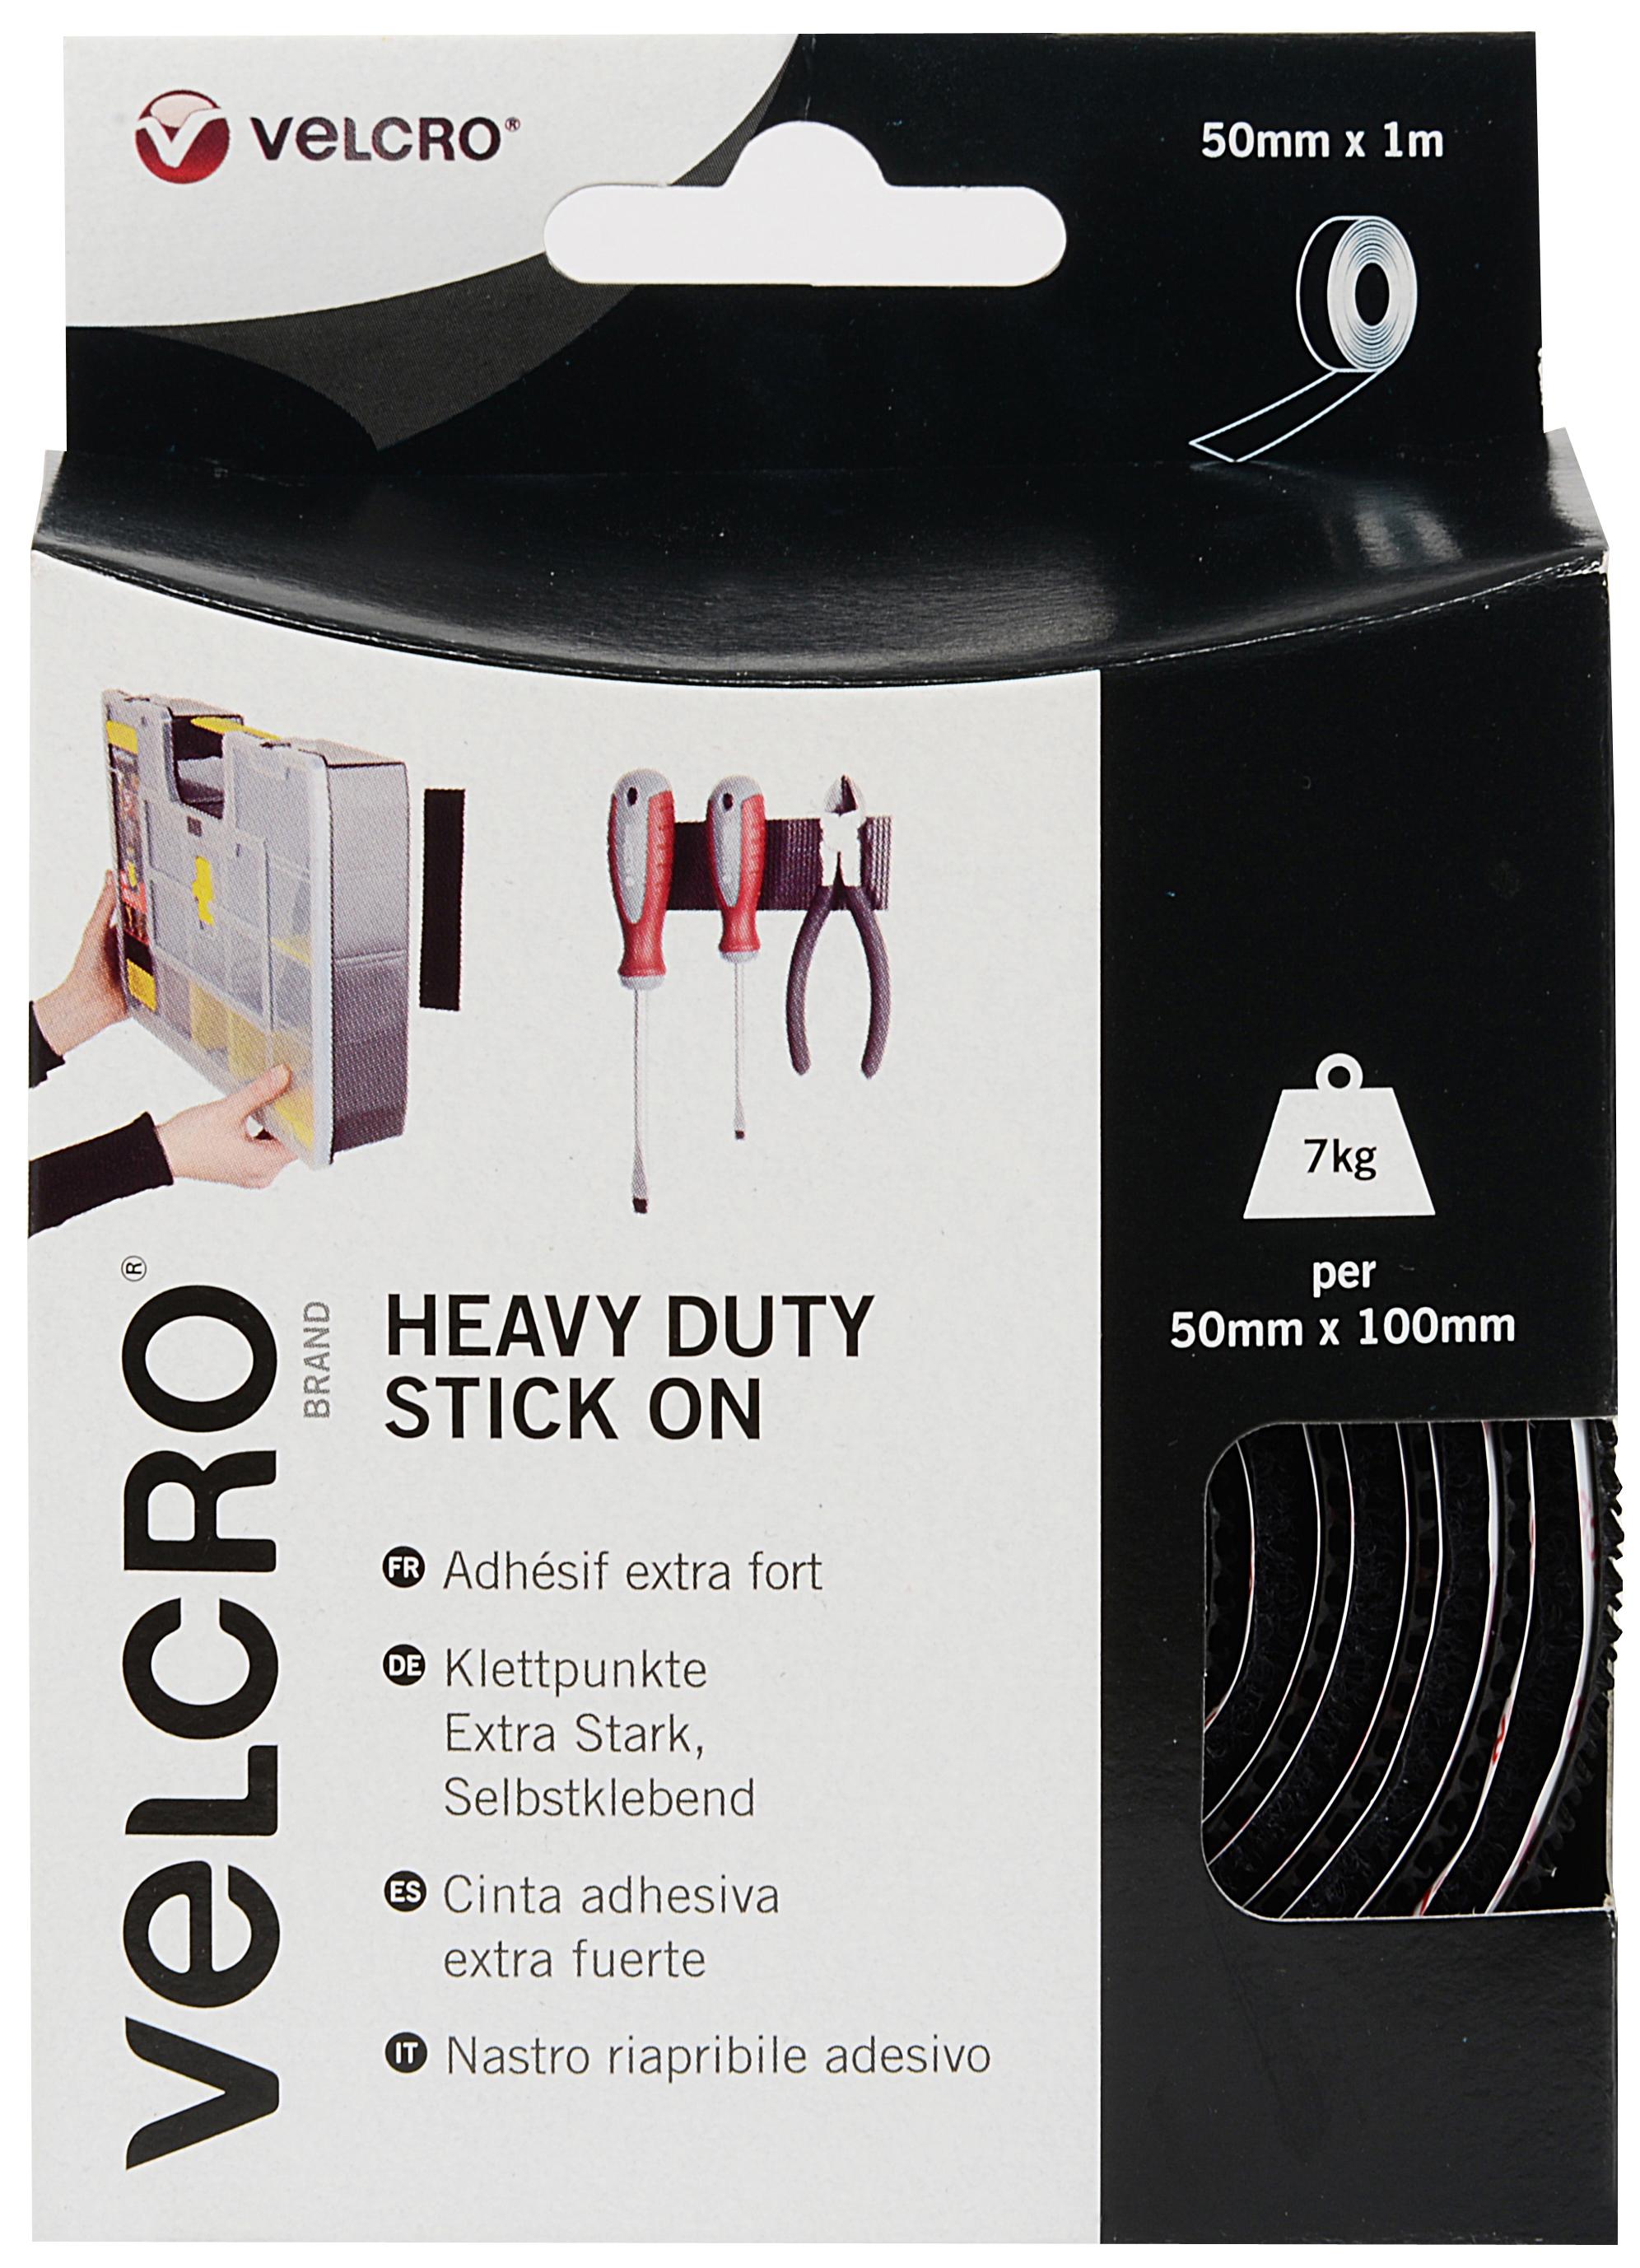 VELCRO Heavy Duty Stick on Tape (Black) Halfords UK